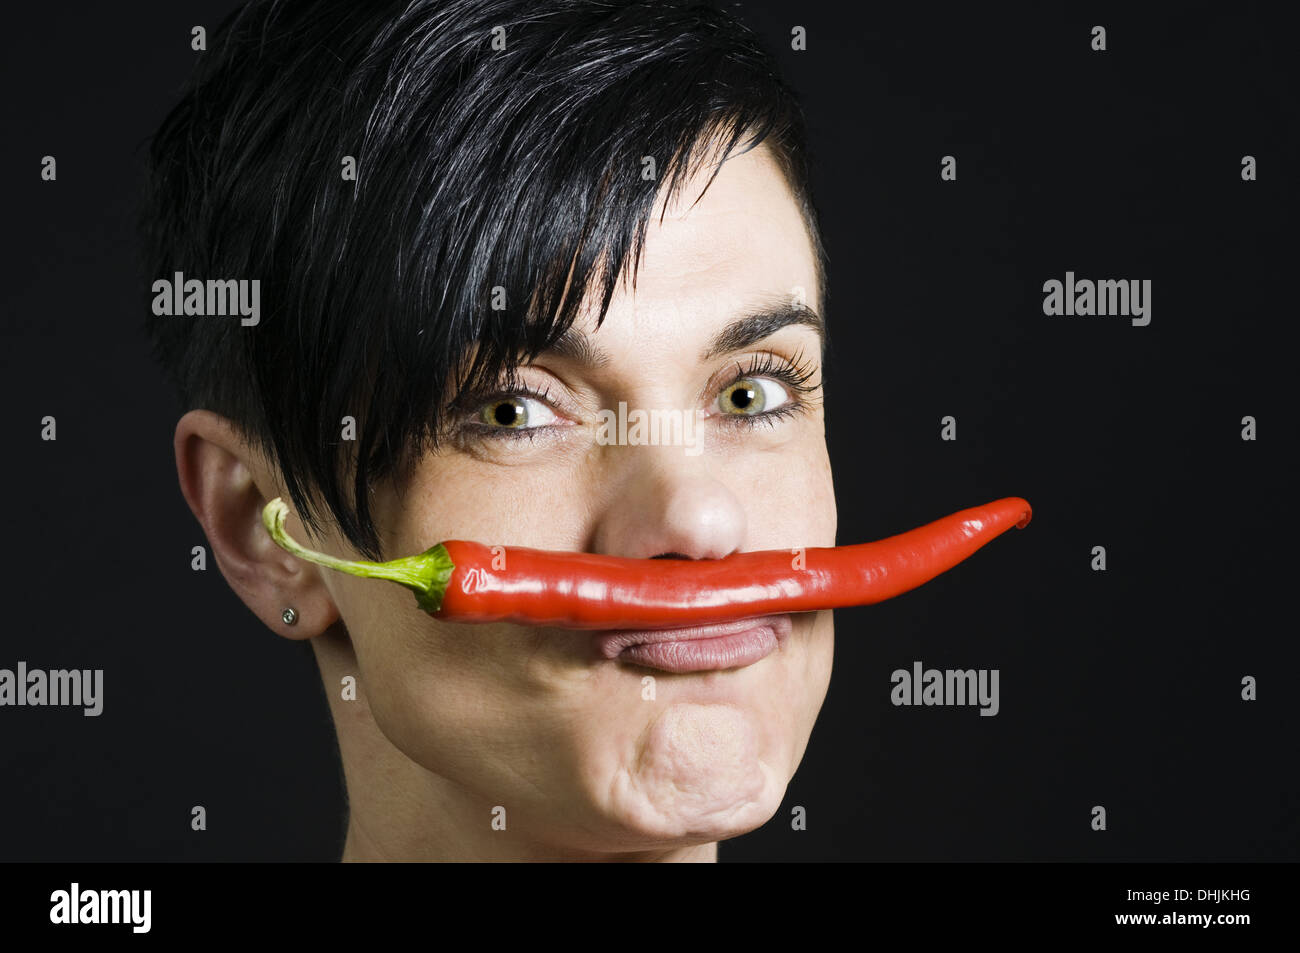 chilli on lips Stock Photo